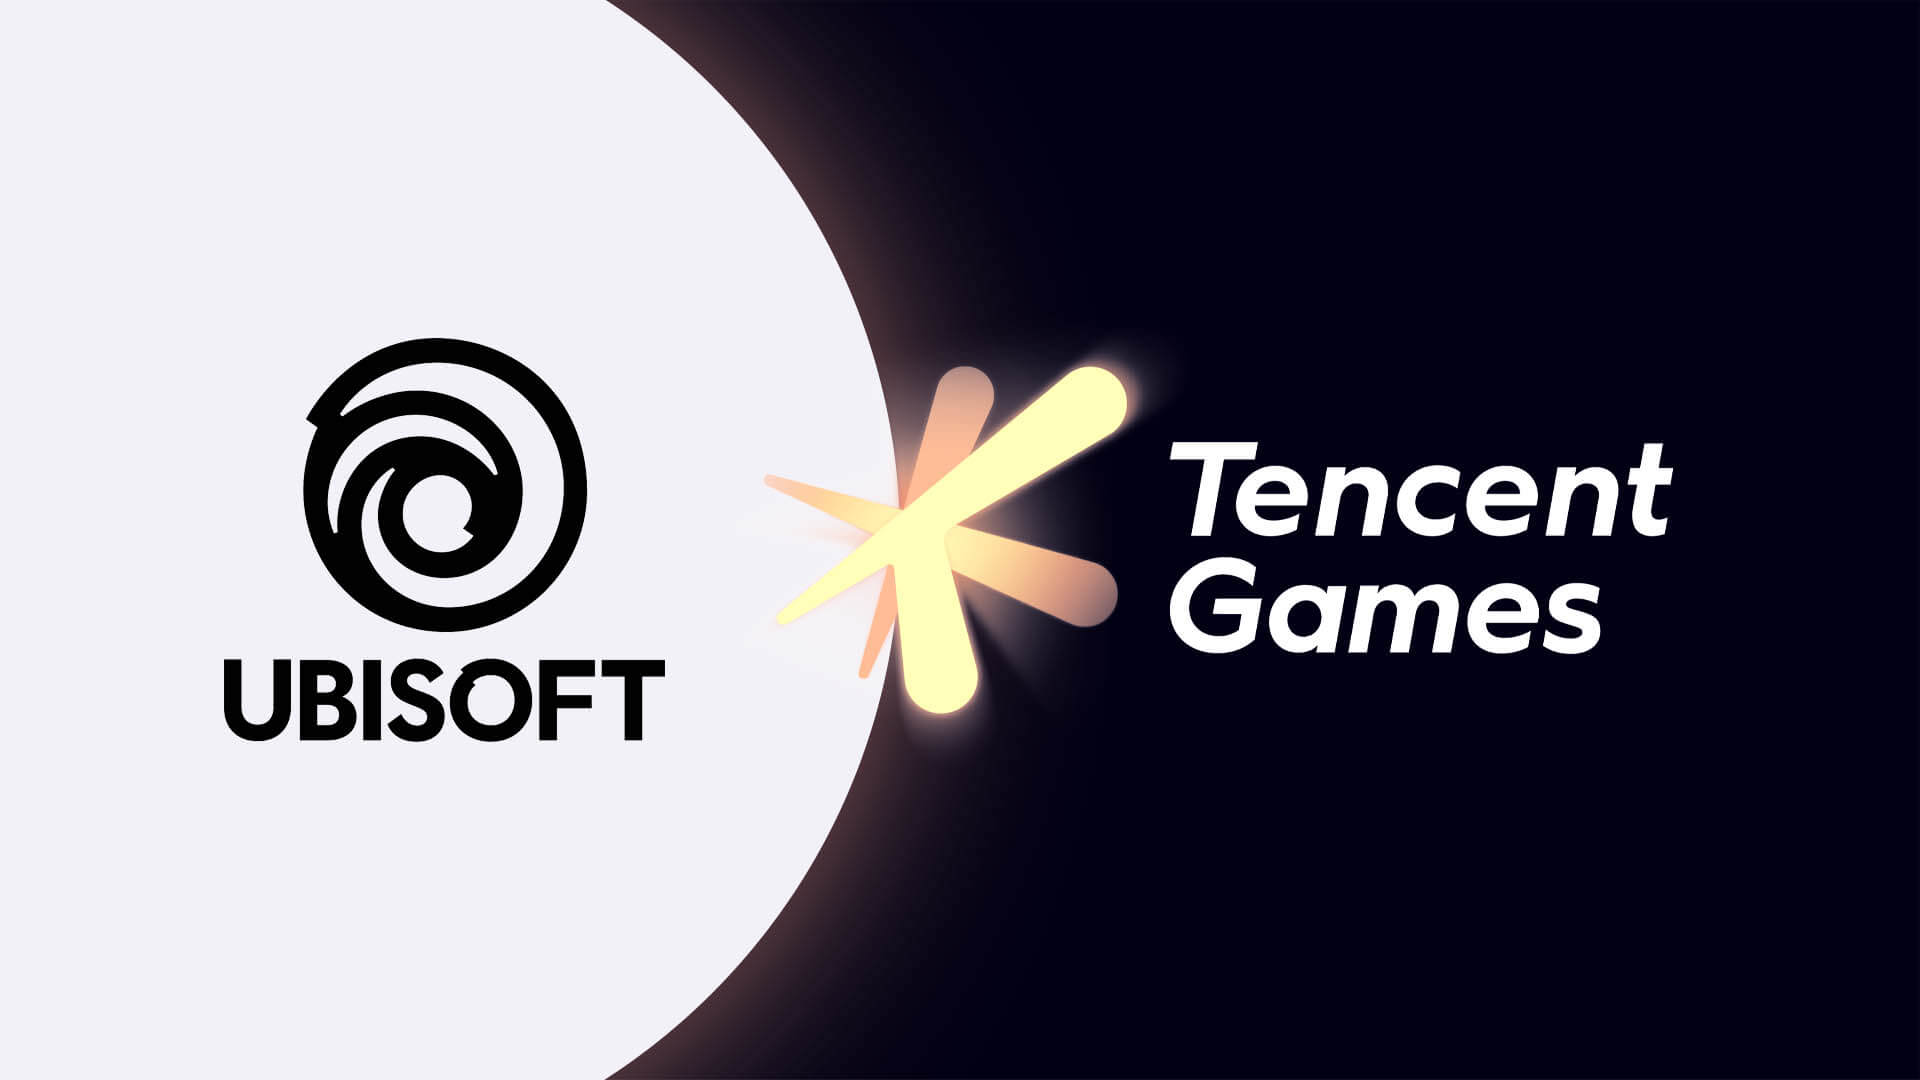 Tencent Ubisoft